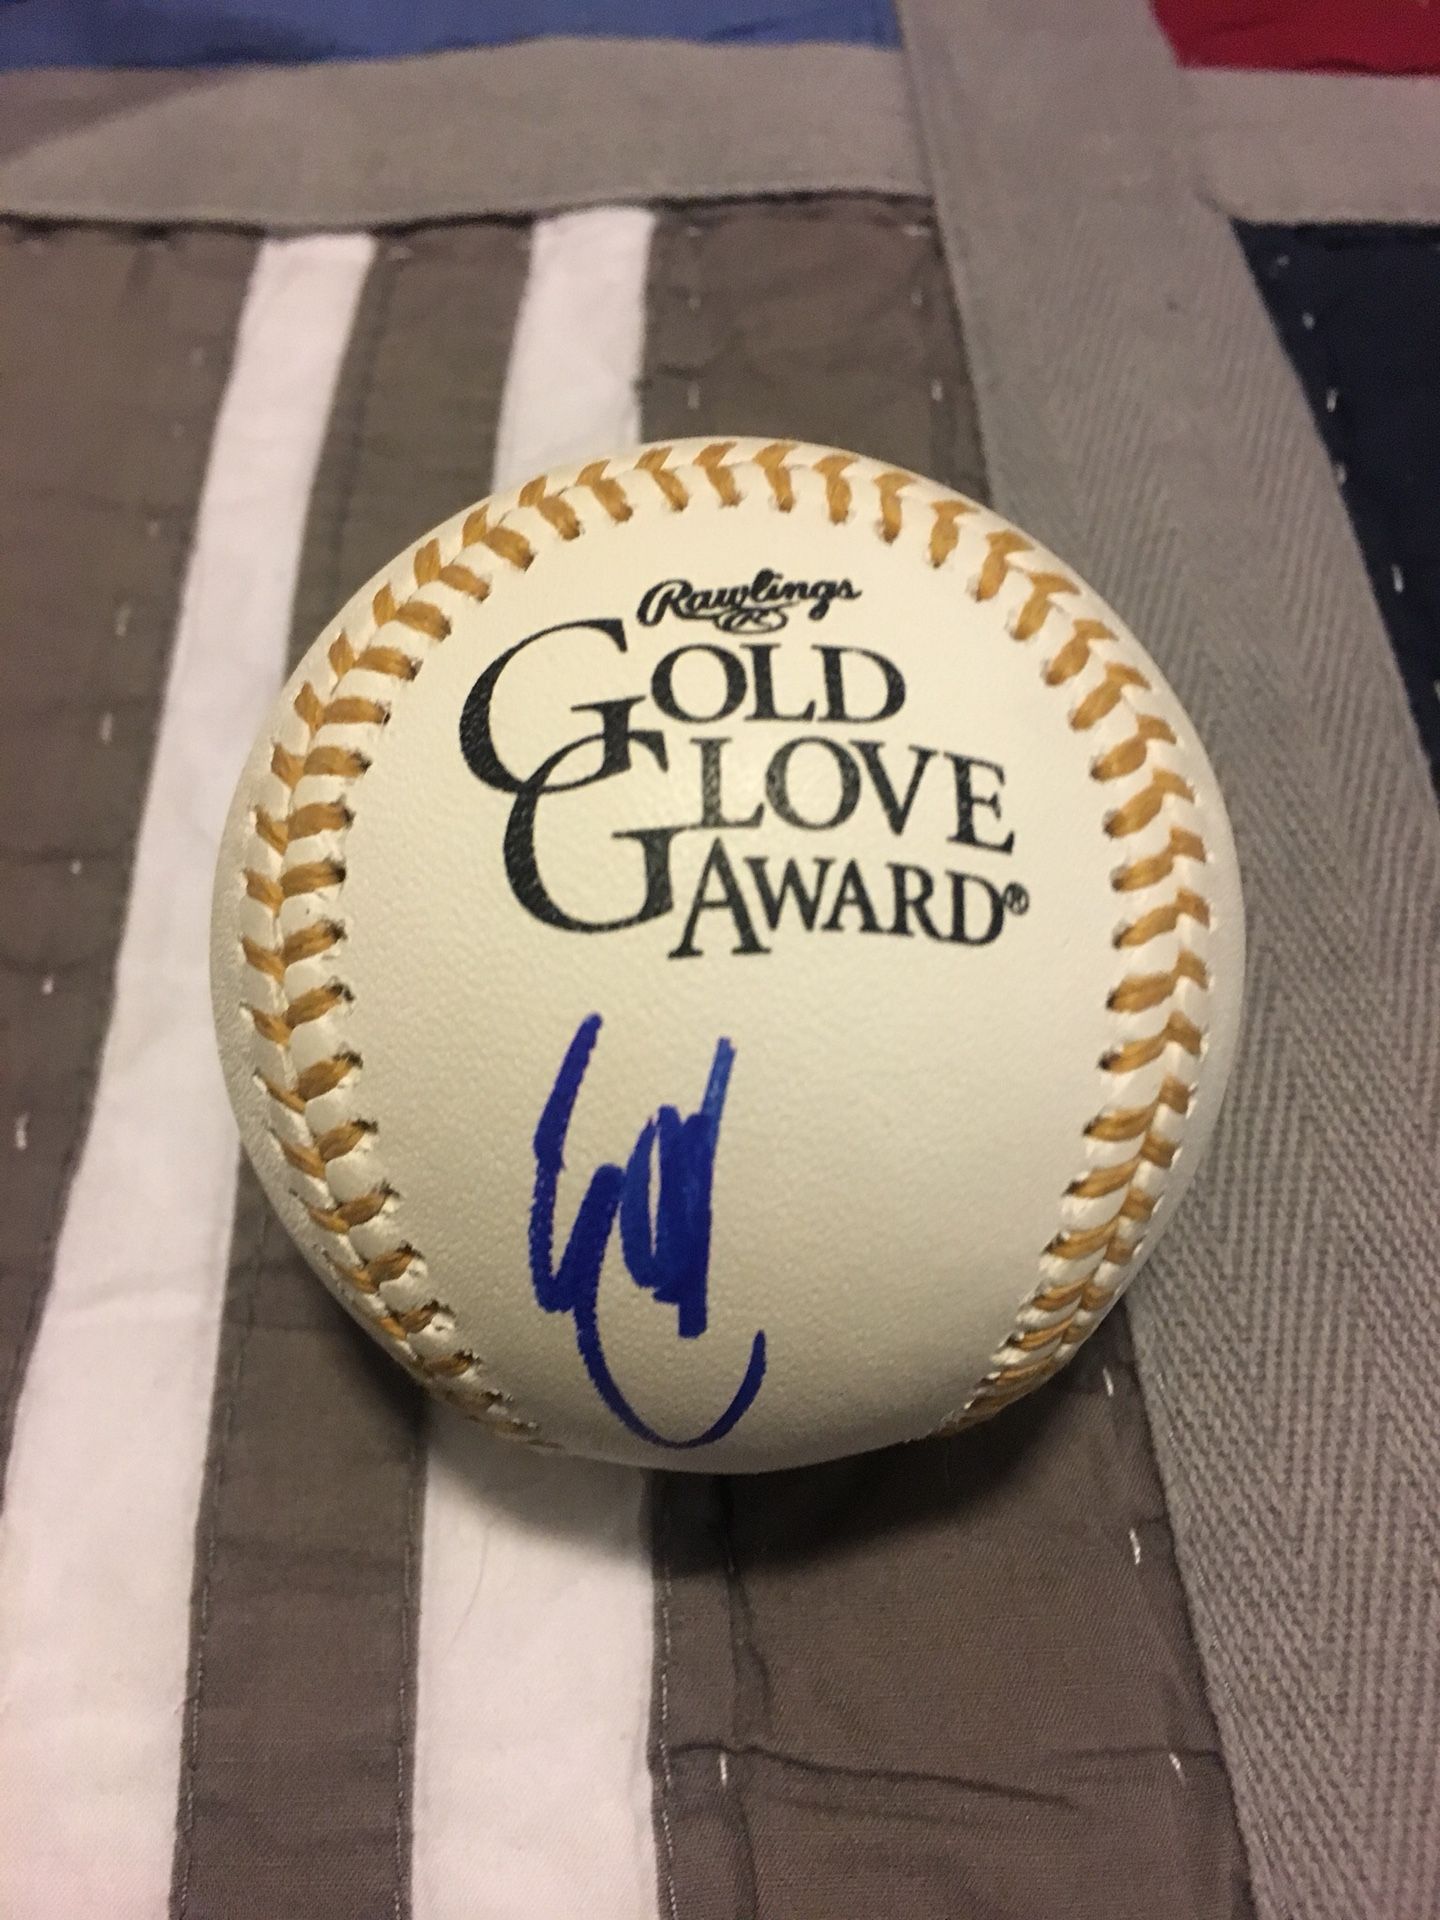 Eric Hosmer Signed Baseball - Royals/Padres (Autographs)